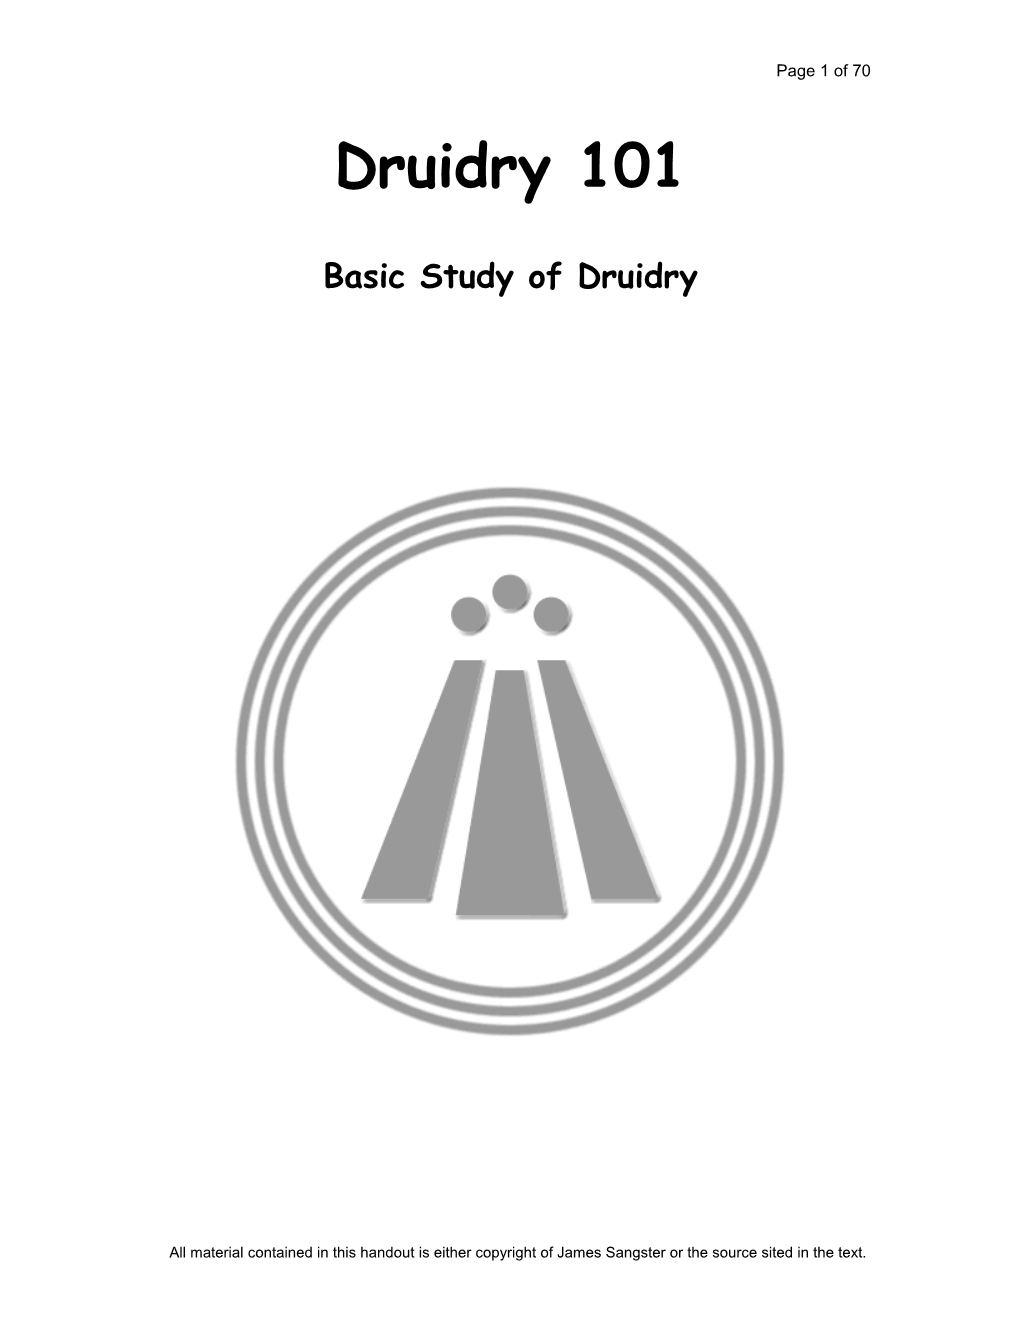 Basic Study of Druidry